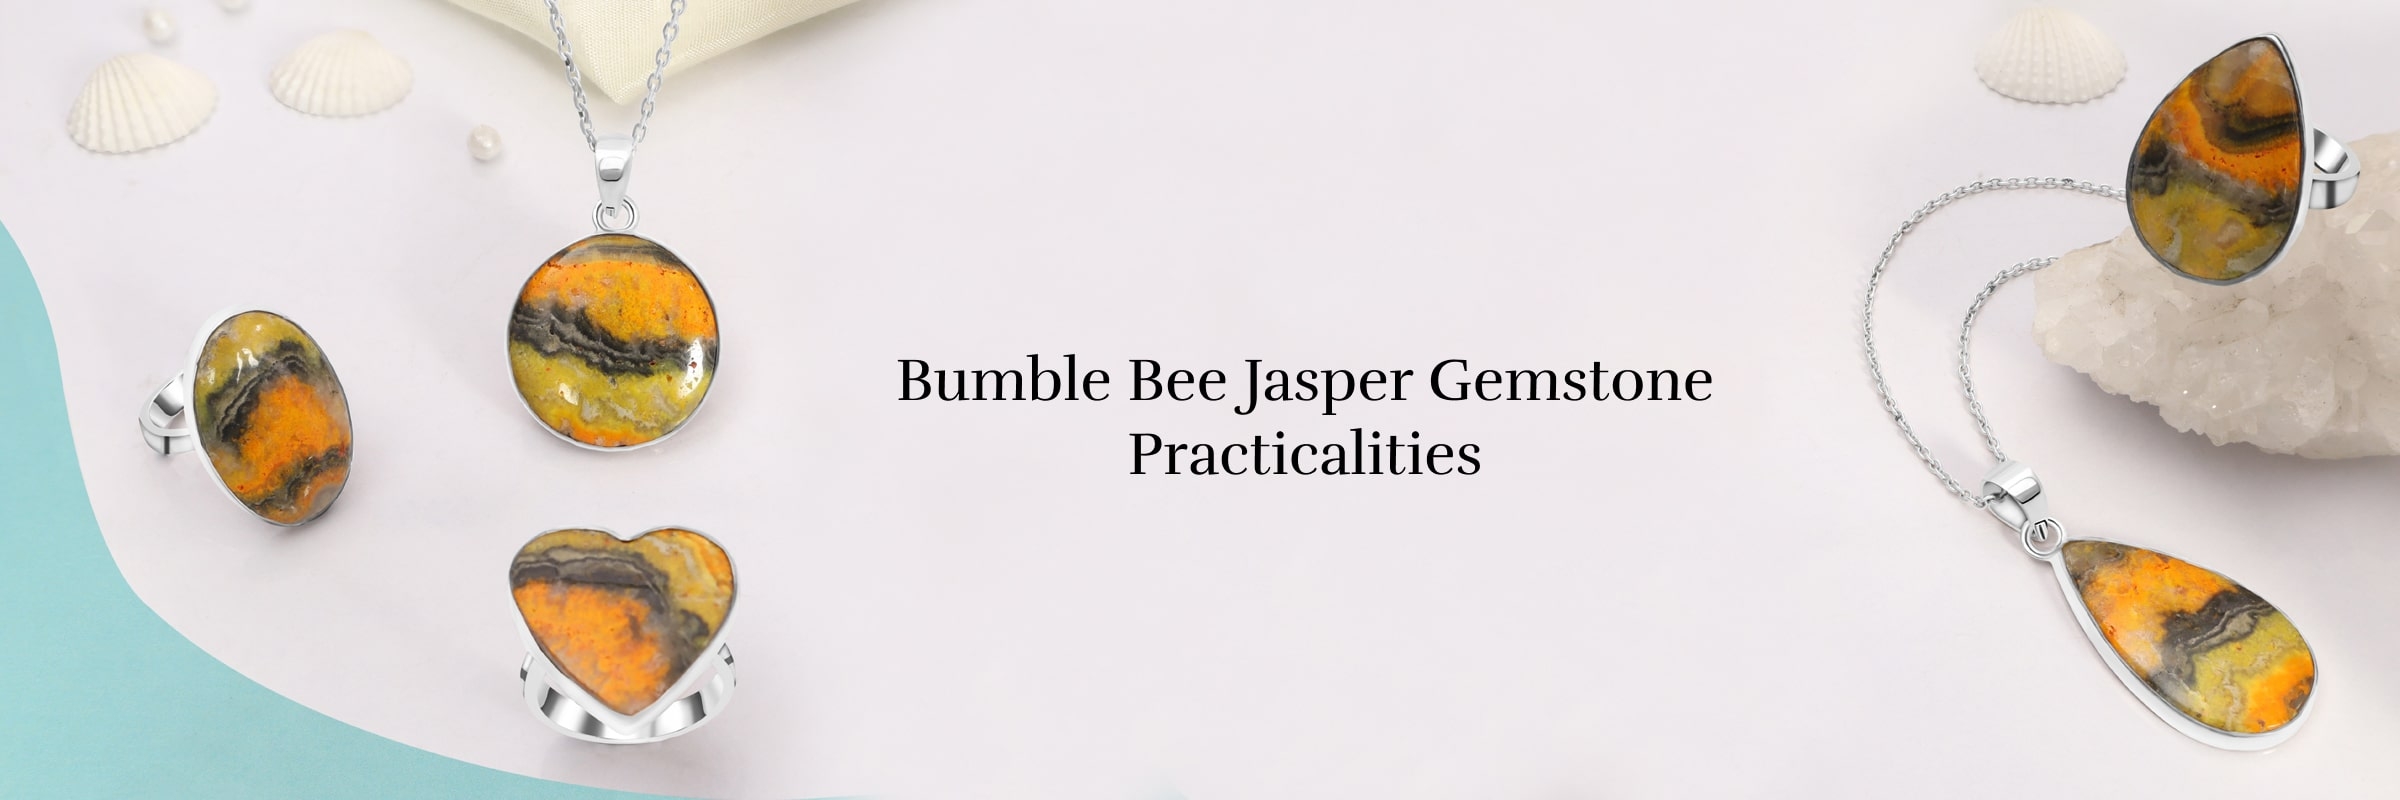 Uses of Bumble Bee Jasper Gem